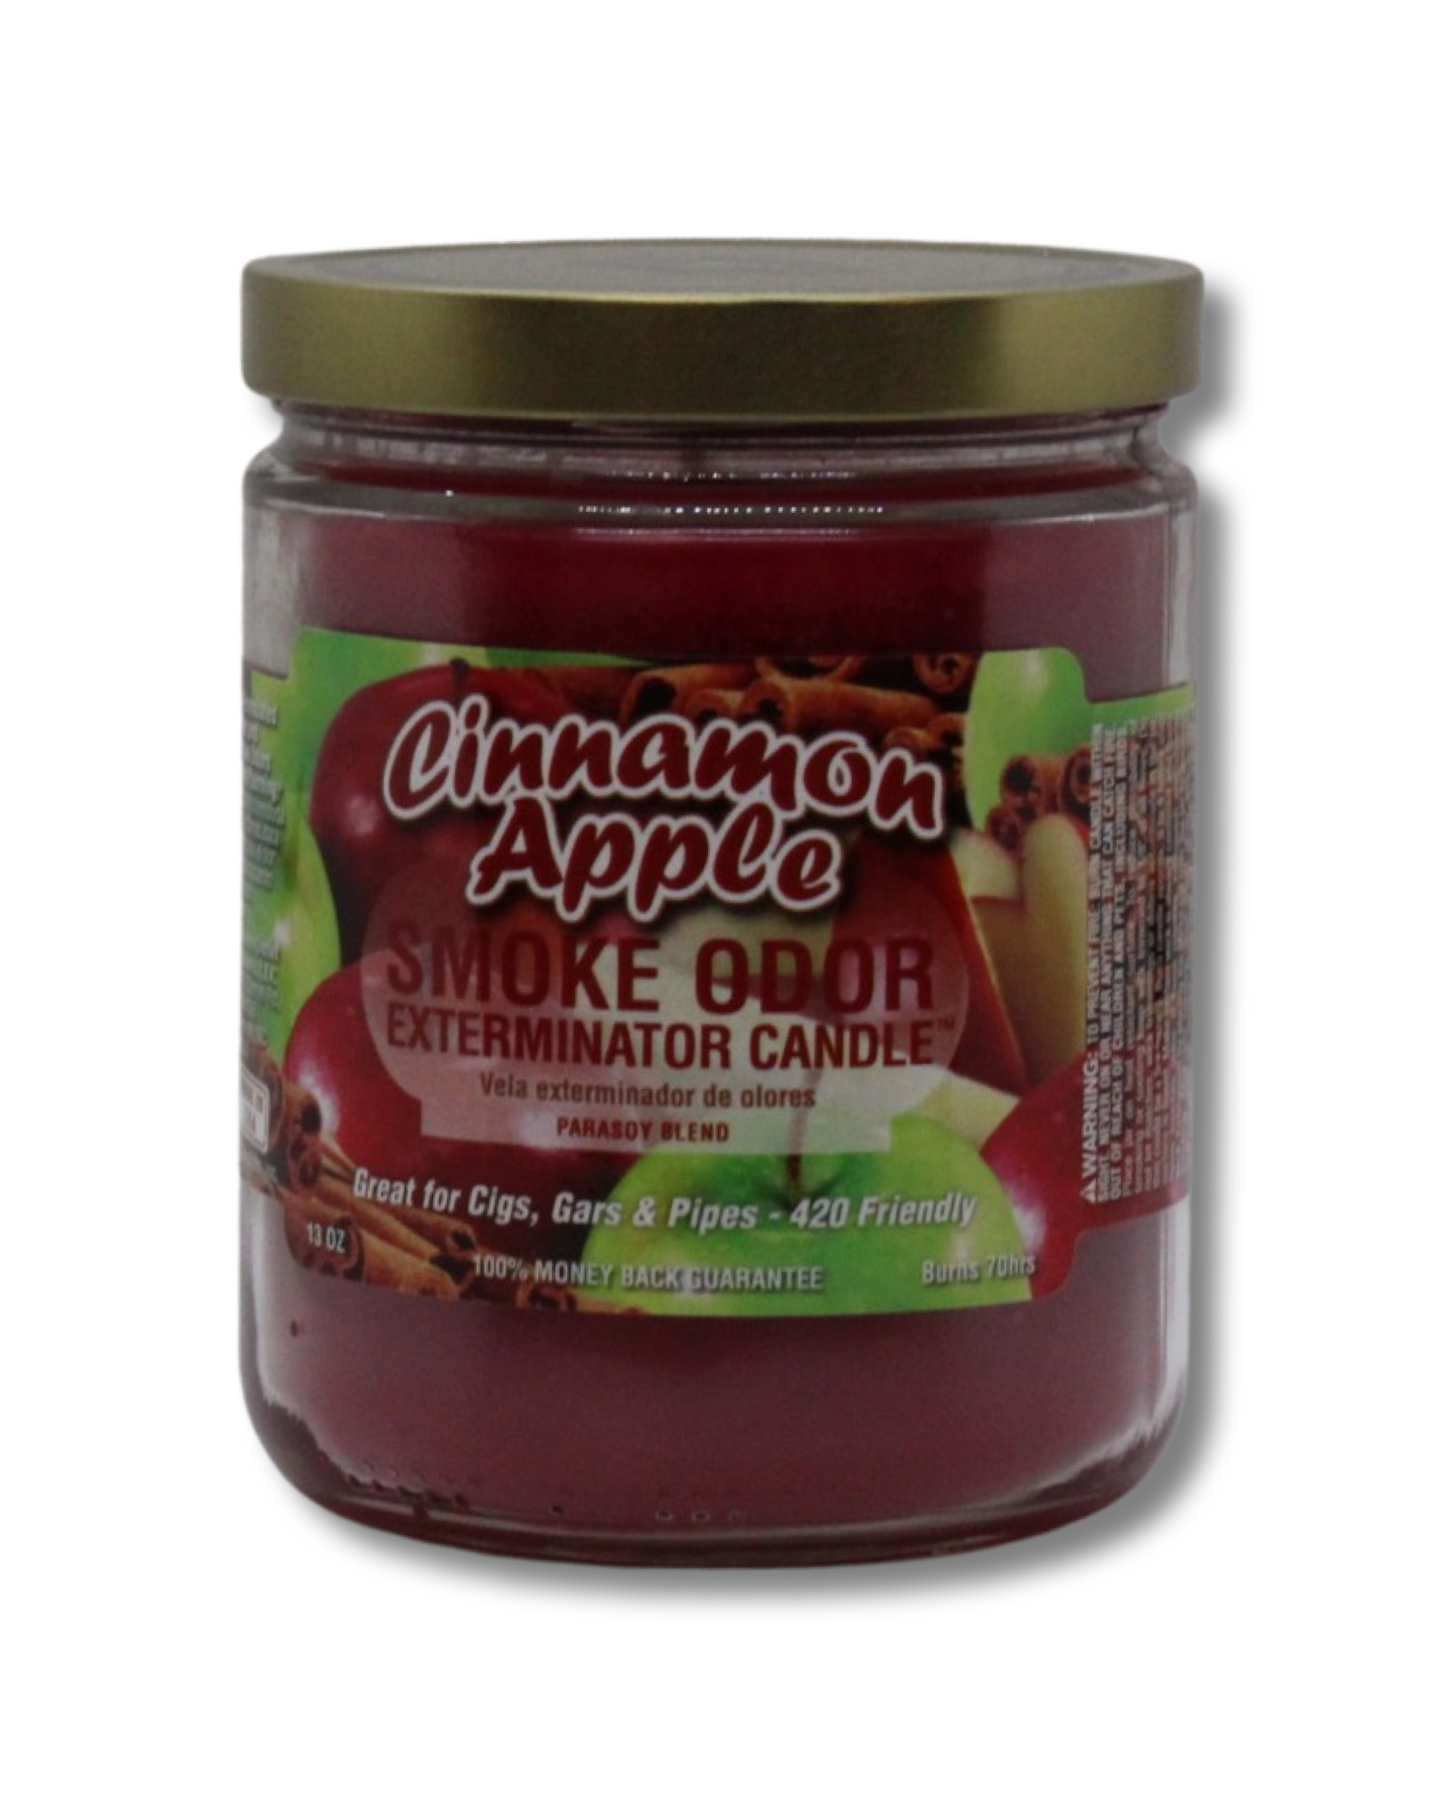 Smoke Odor Exterminator Candle Cinnamon Apple